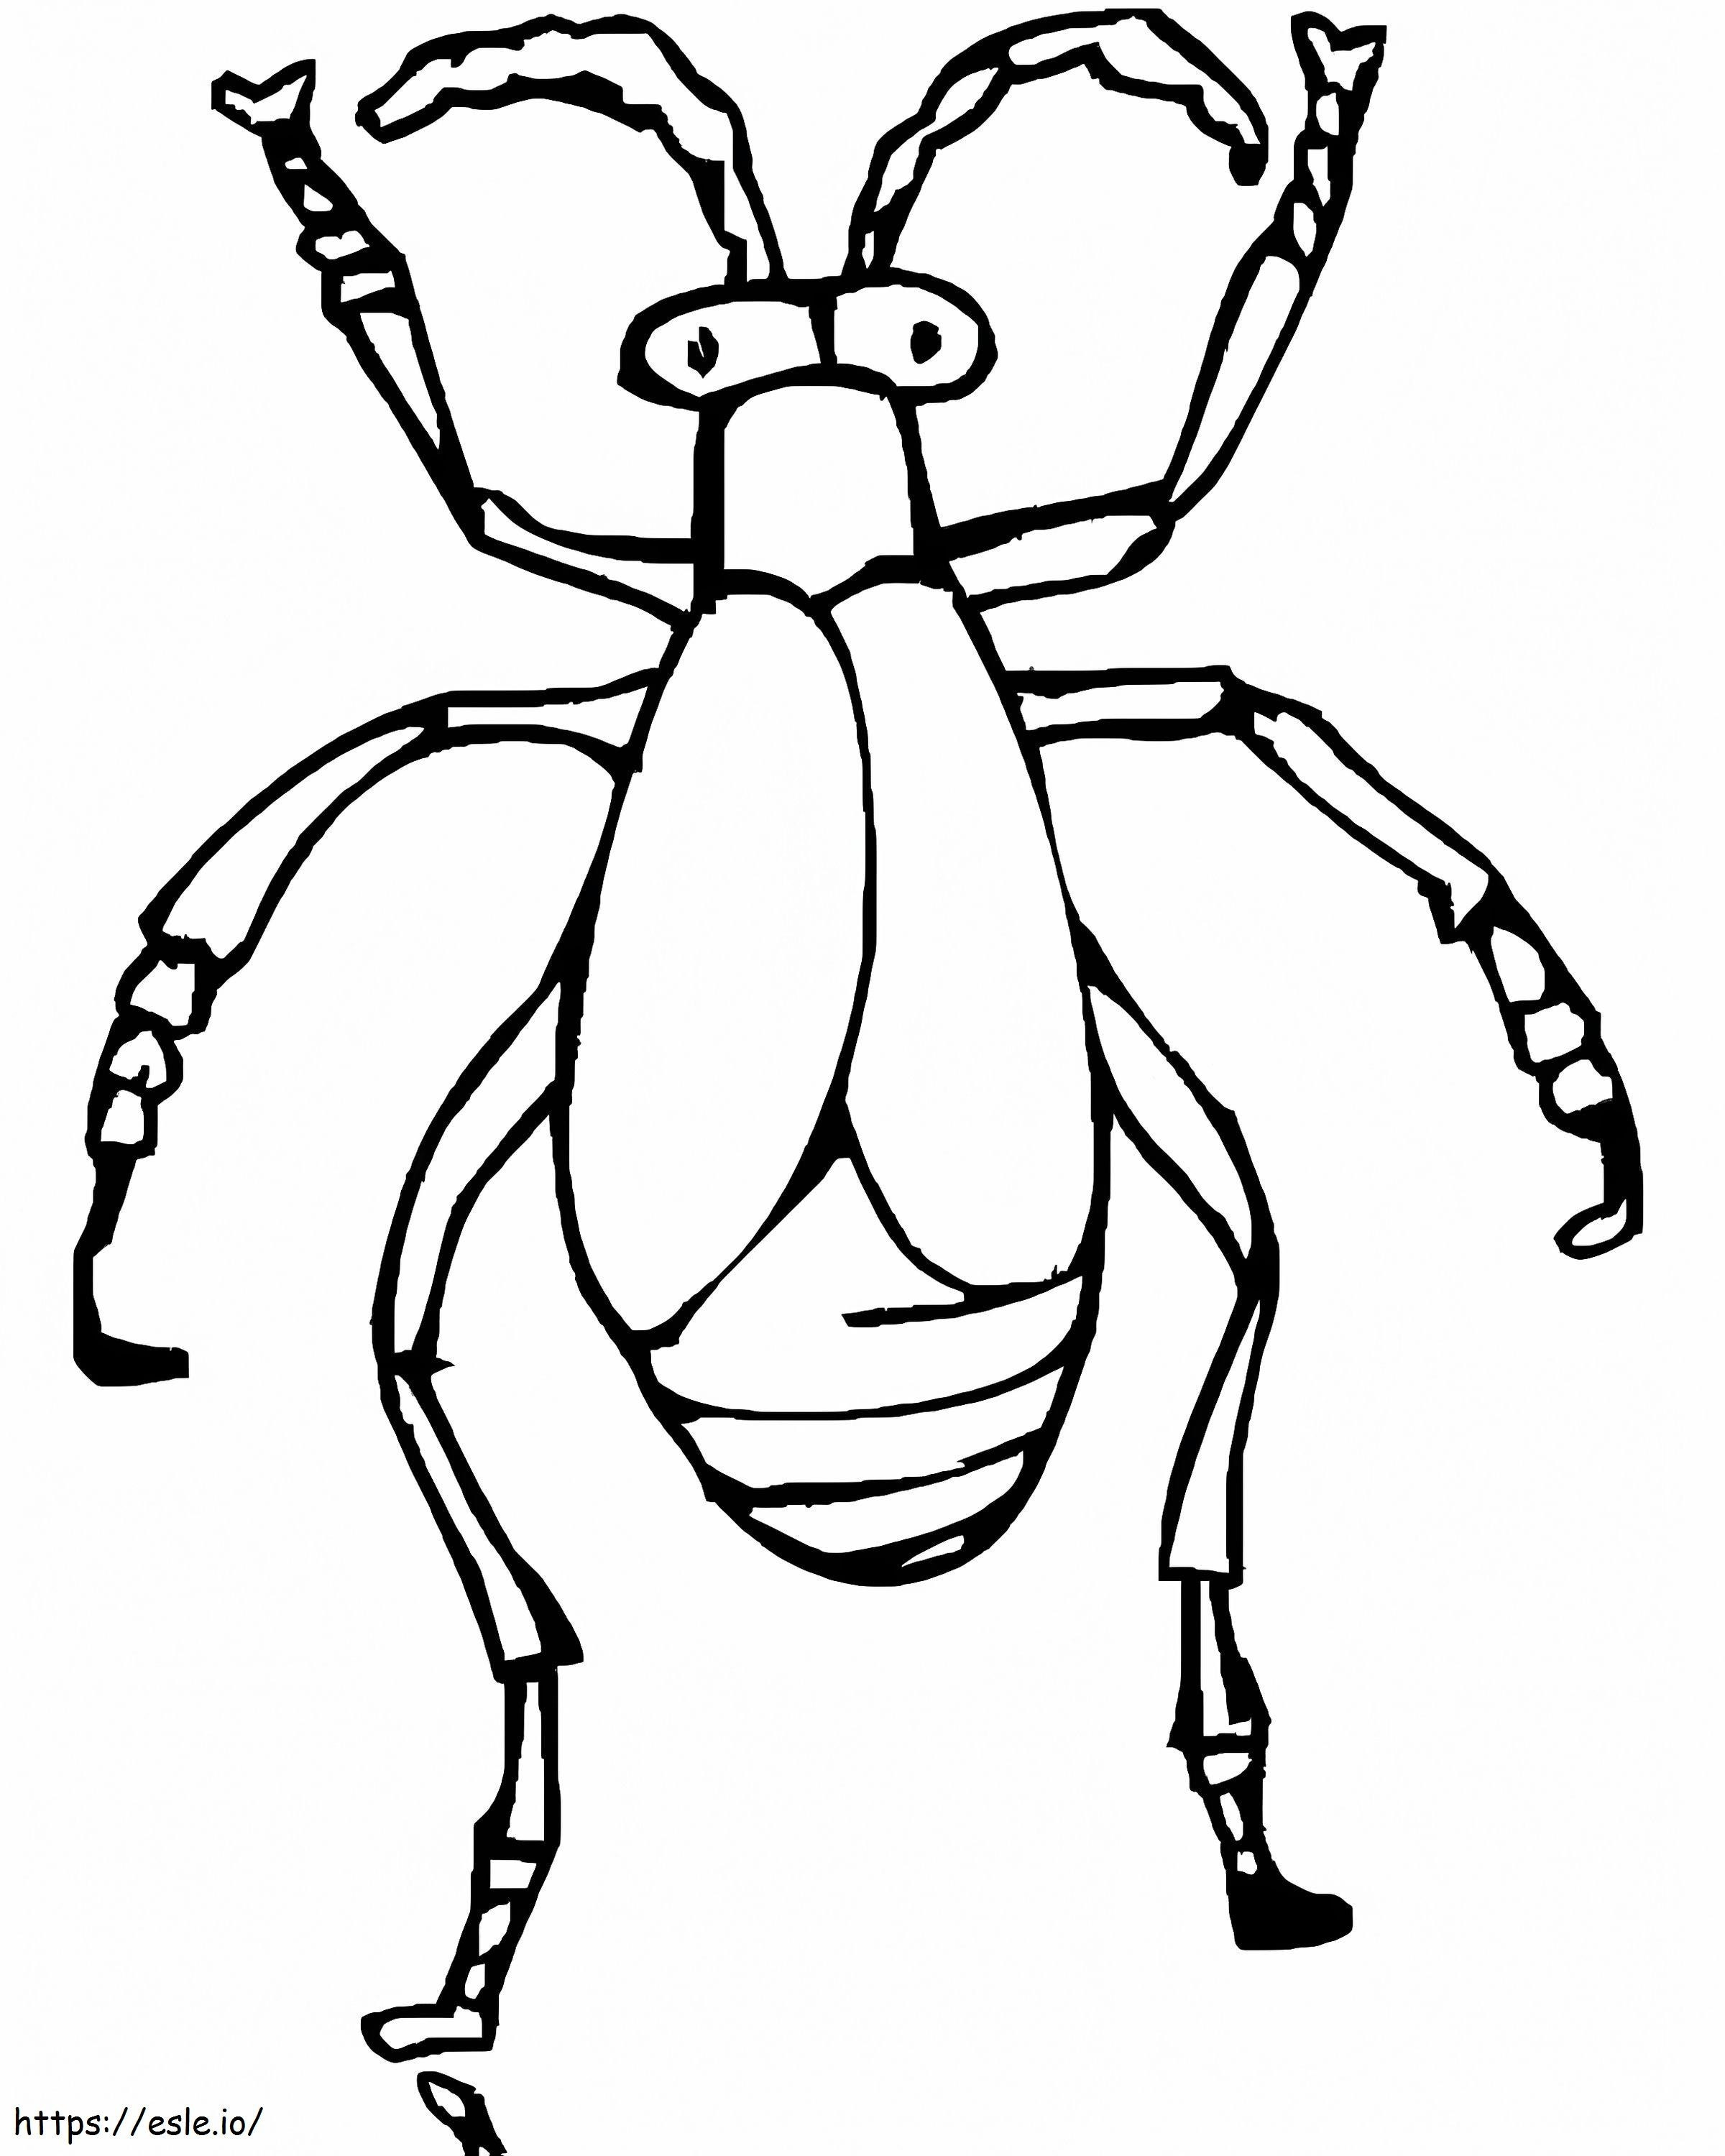 Free Printable Beetle coloring page